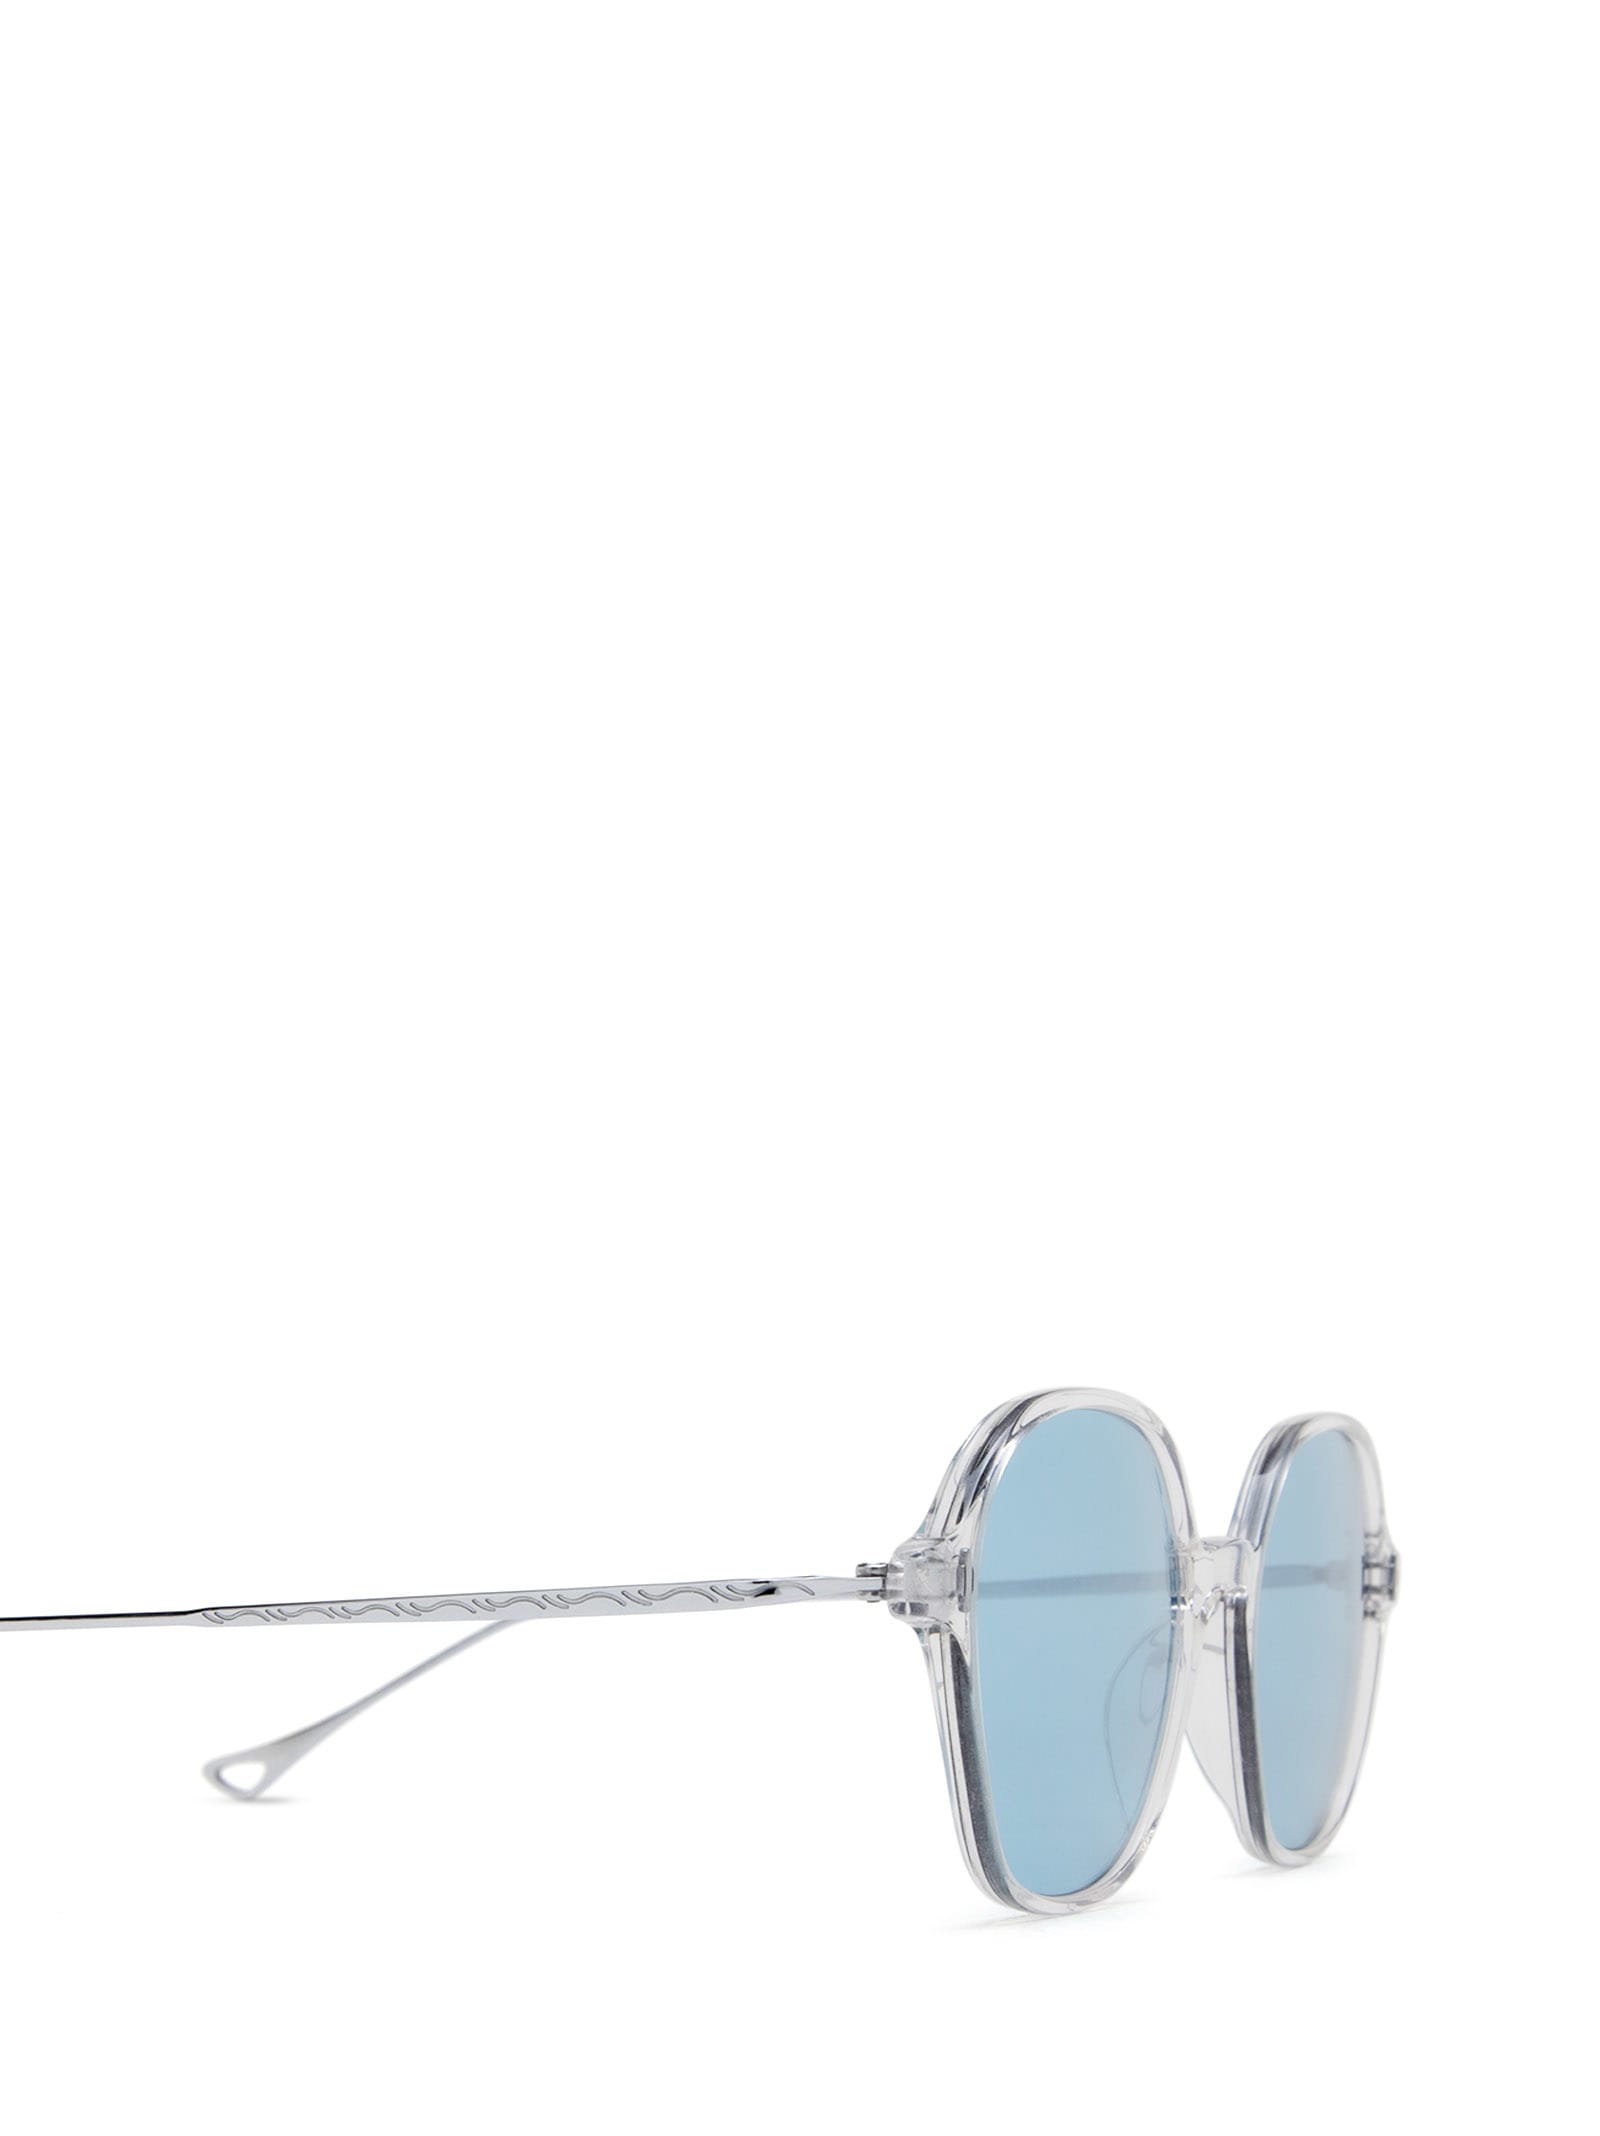 Shop Eyepetizer Windsor Crystal Sunglasses